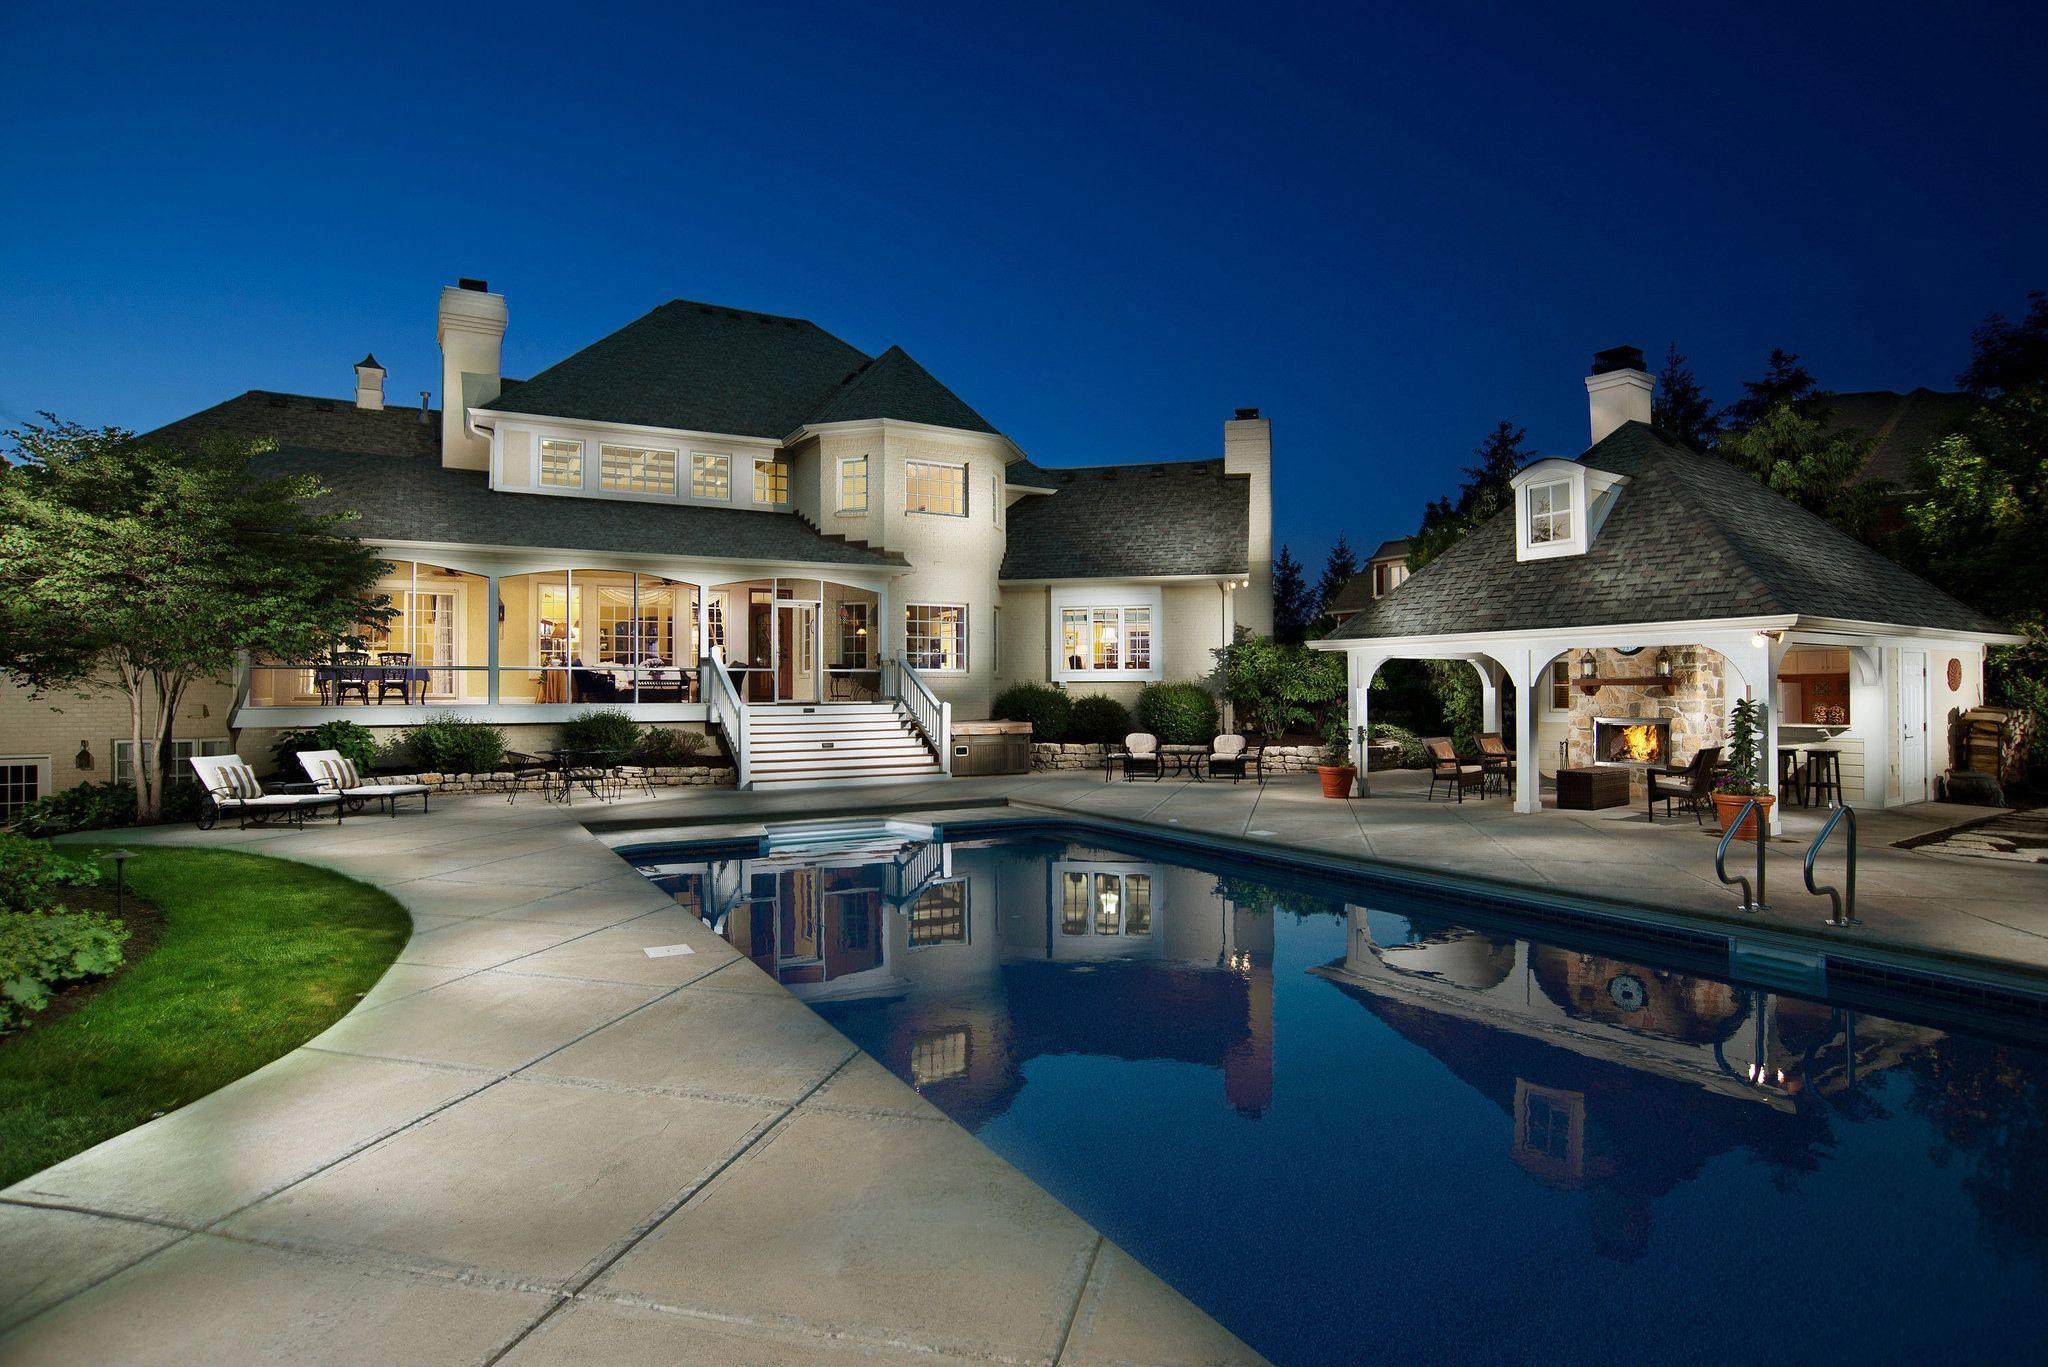 Luxury House Night Pool Beautiful Home Free Wallpaper. dream